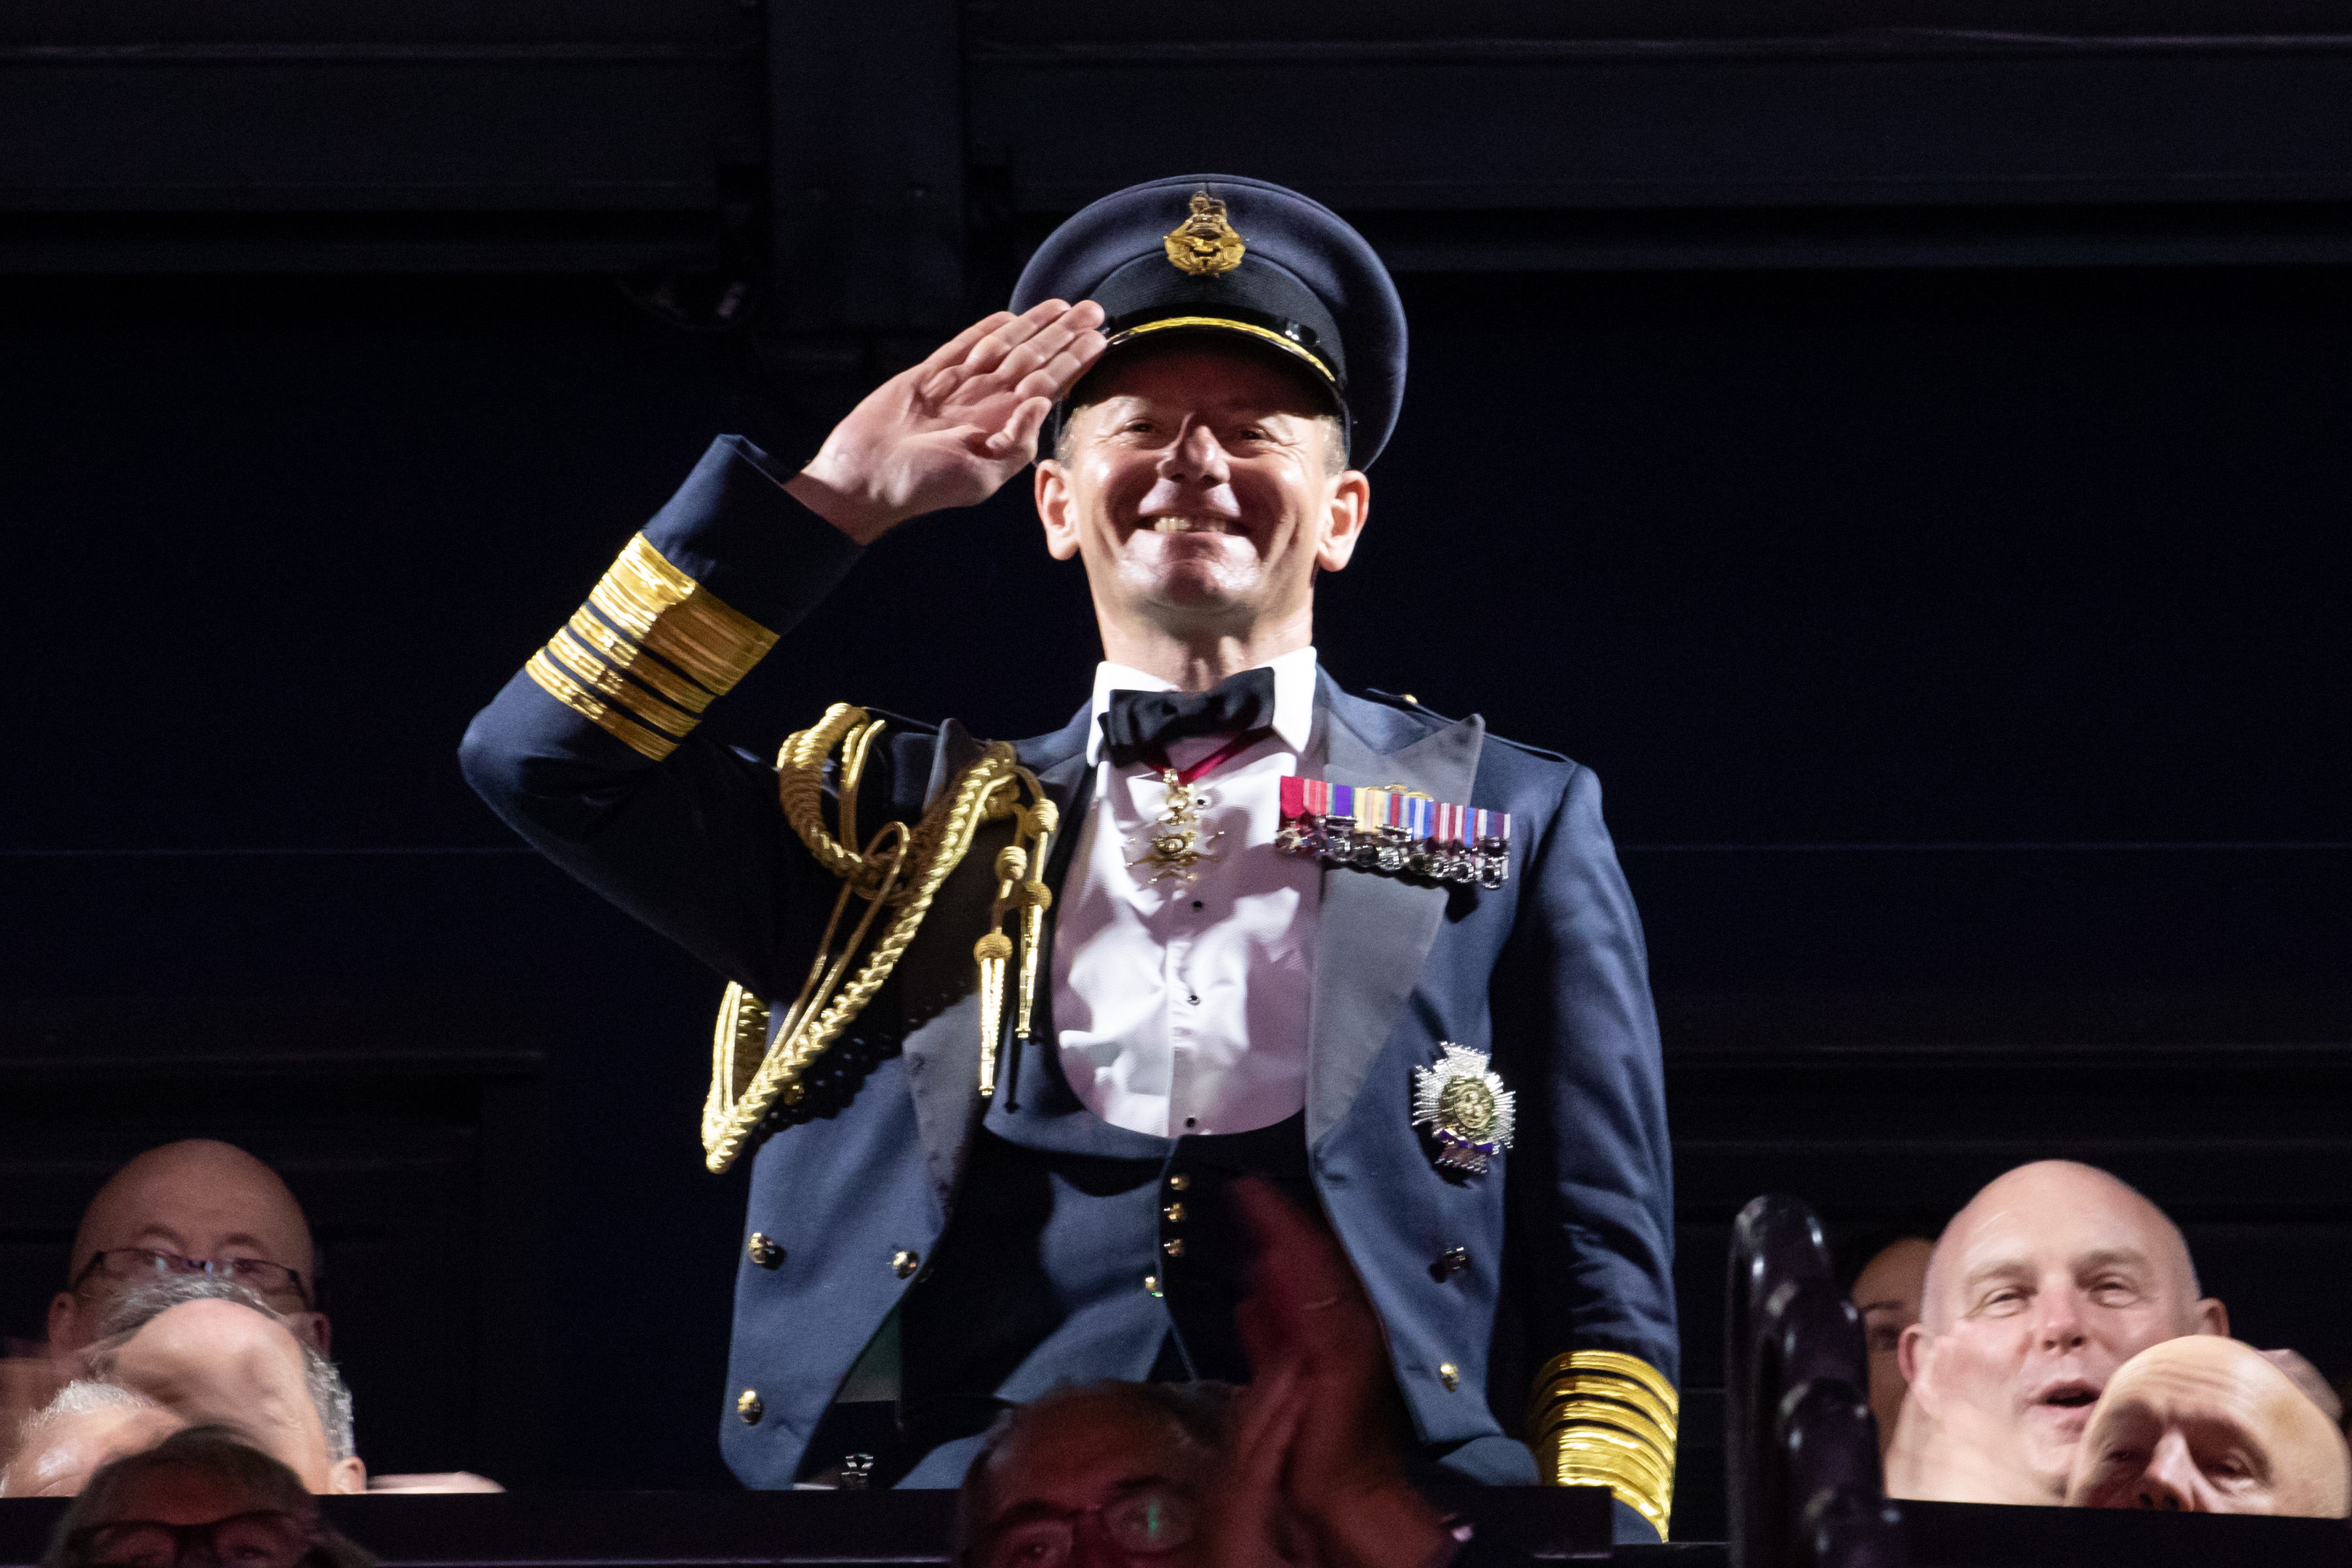 Image shows RAF aviator saluting amid public crowd.